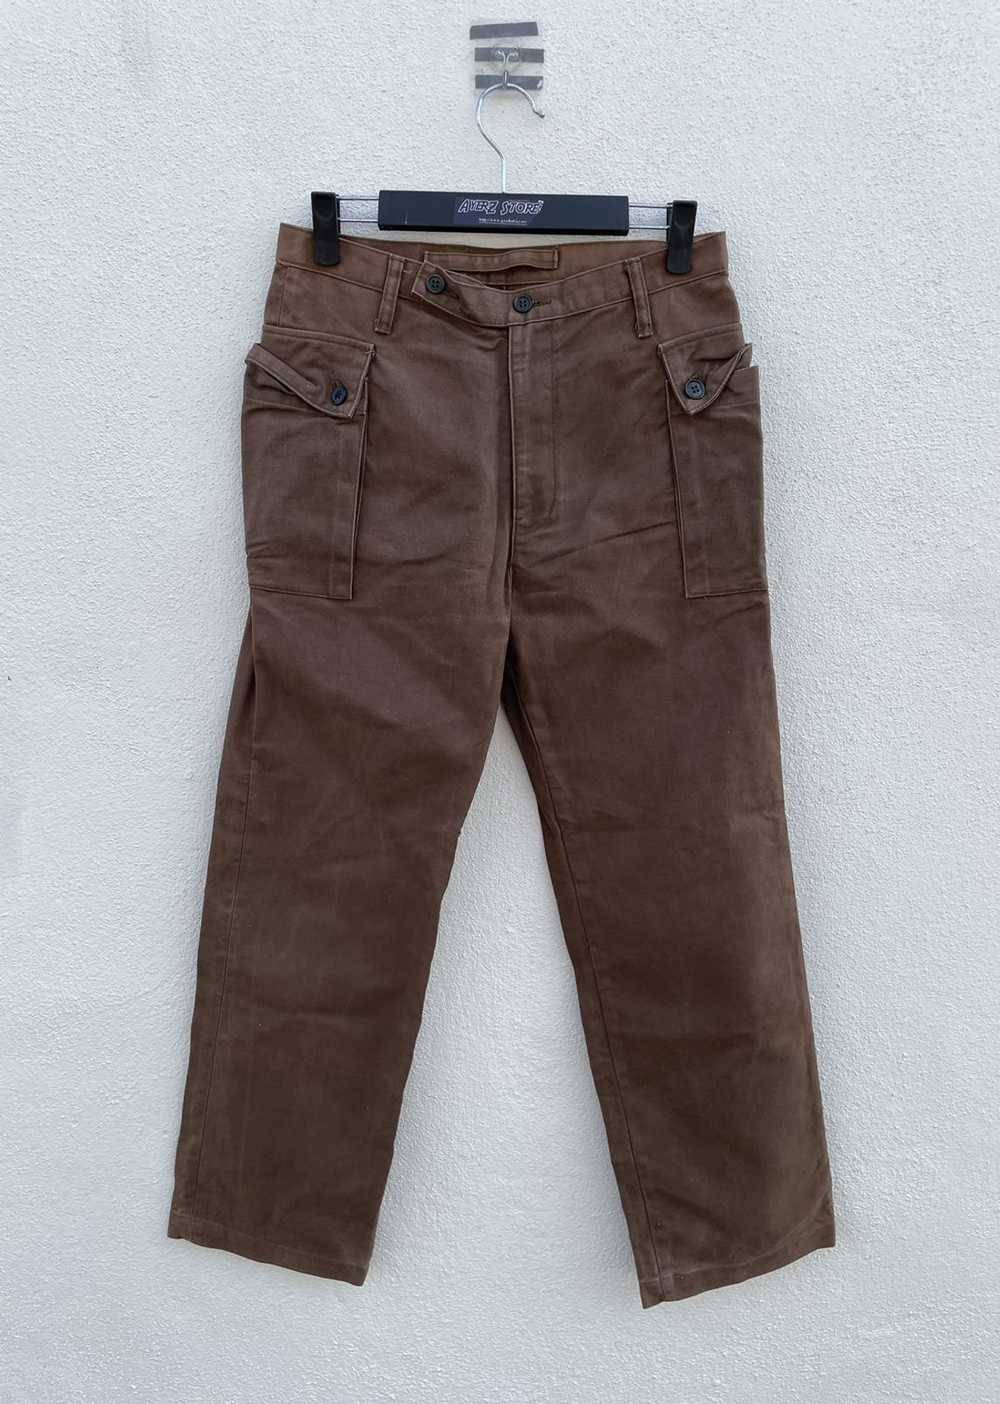 Japanese Brand GGG Pour Homme Cargo Pocket Pants - Gem